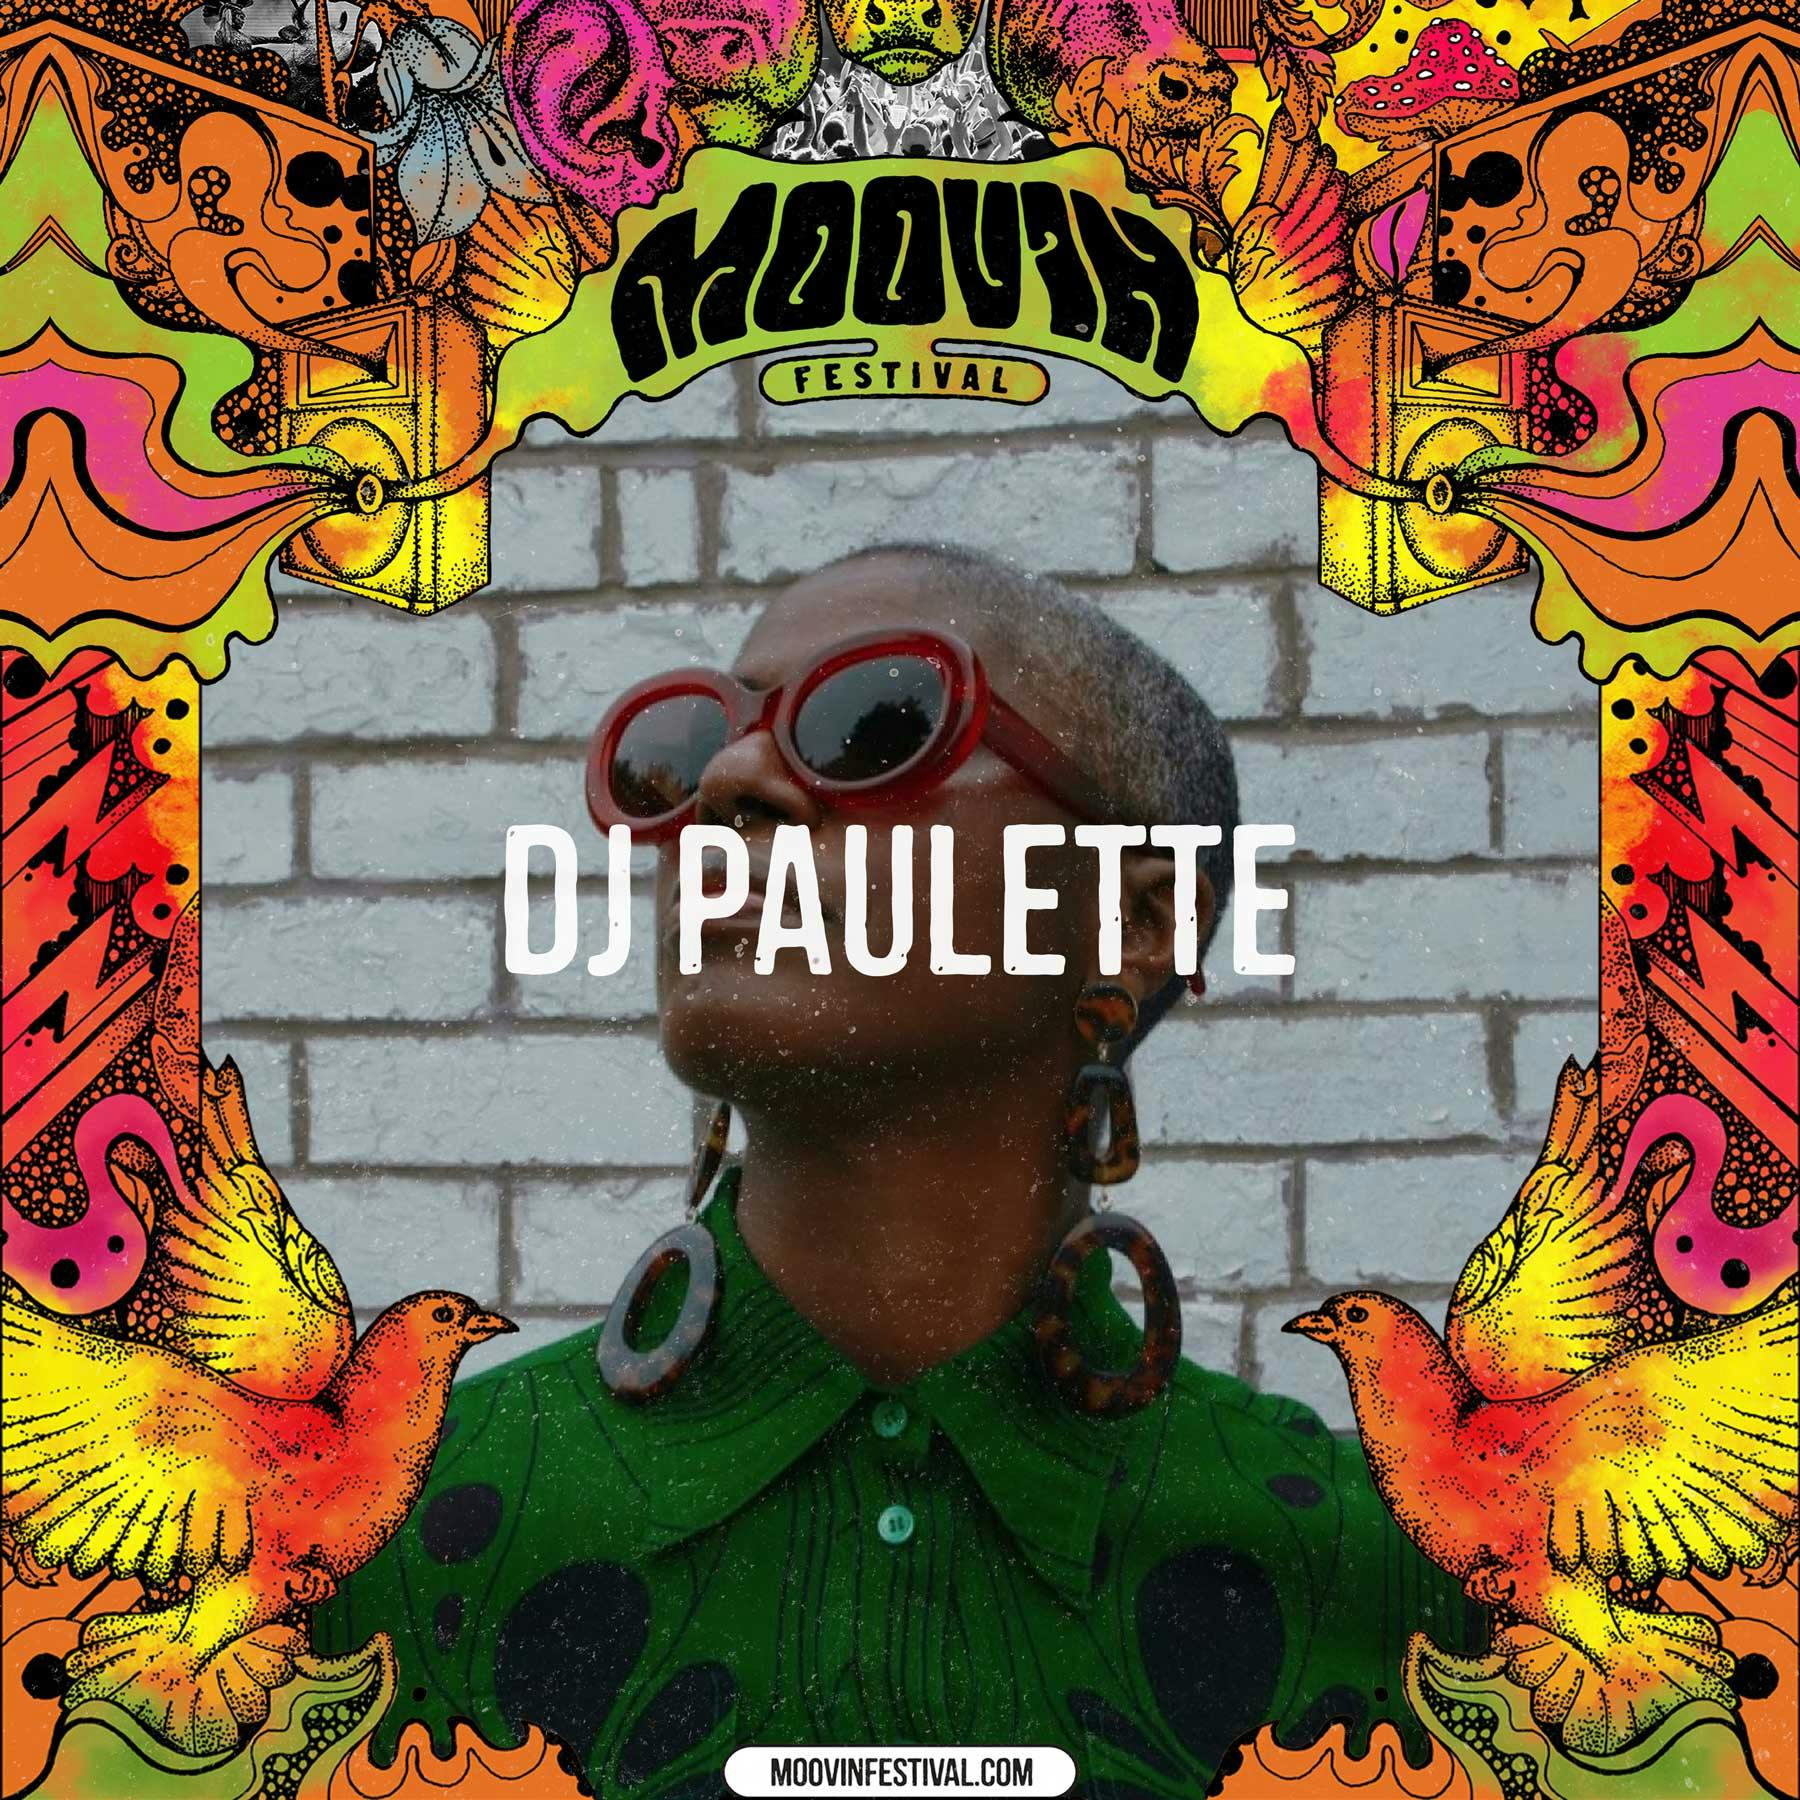 Introducing: DJ Paulette